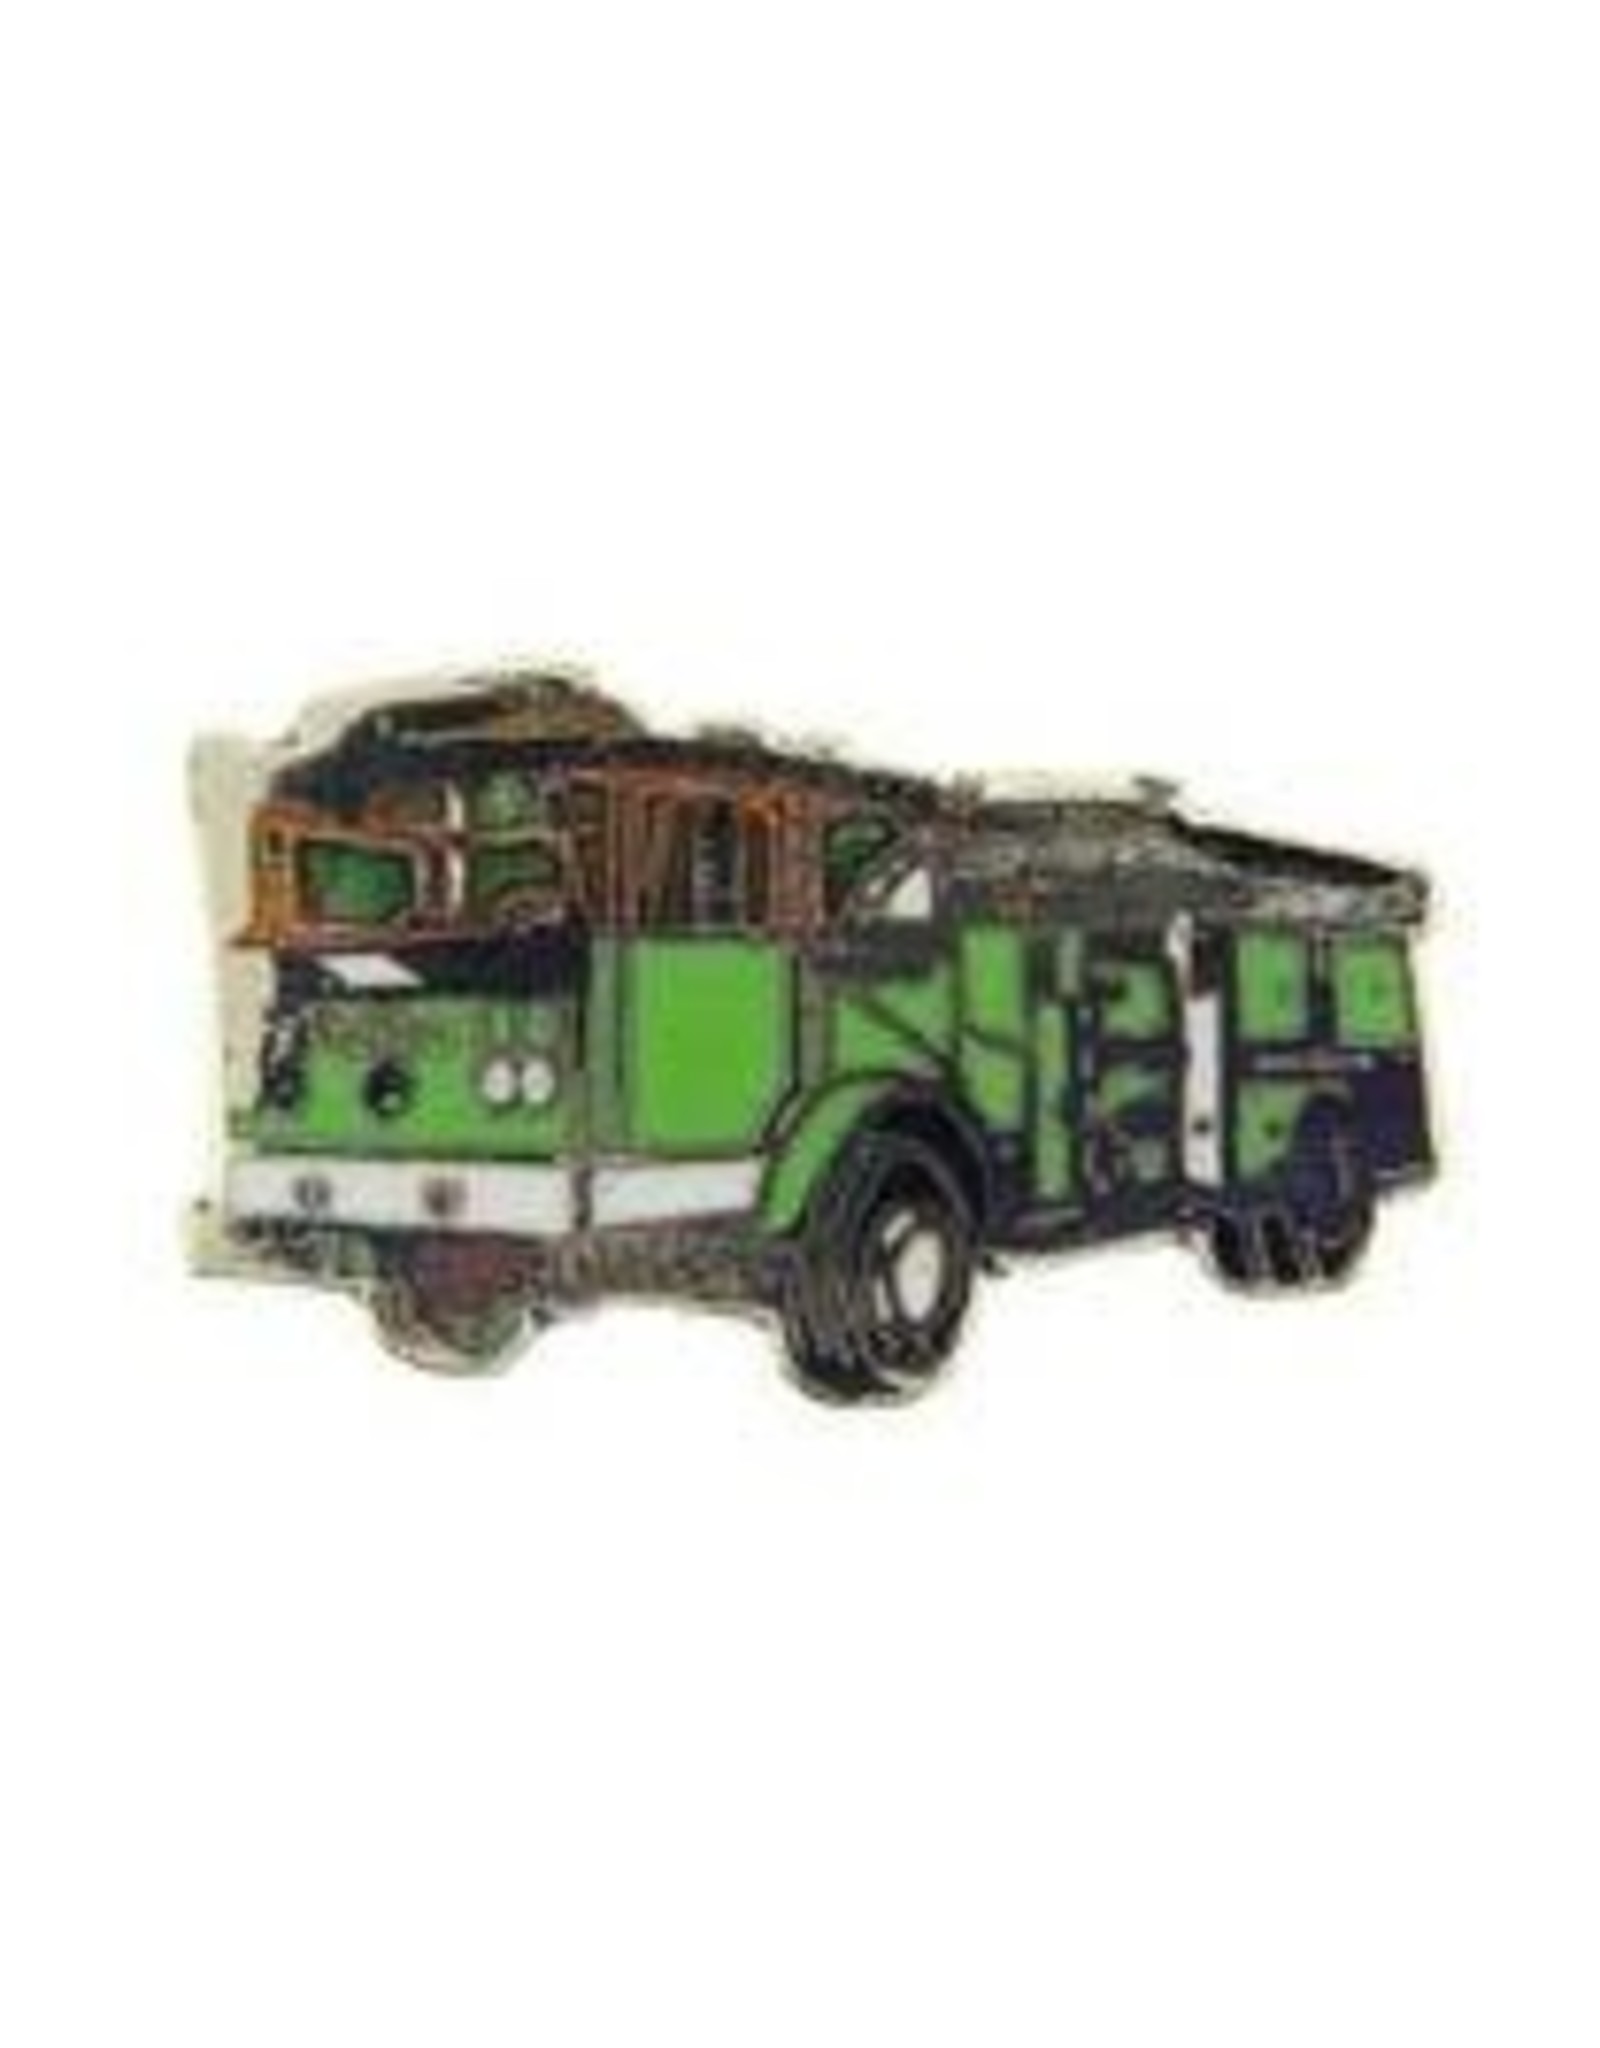 Pin - Vehicle Fire Truck Green